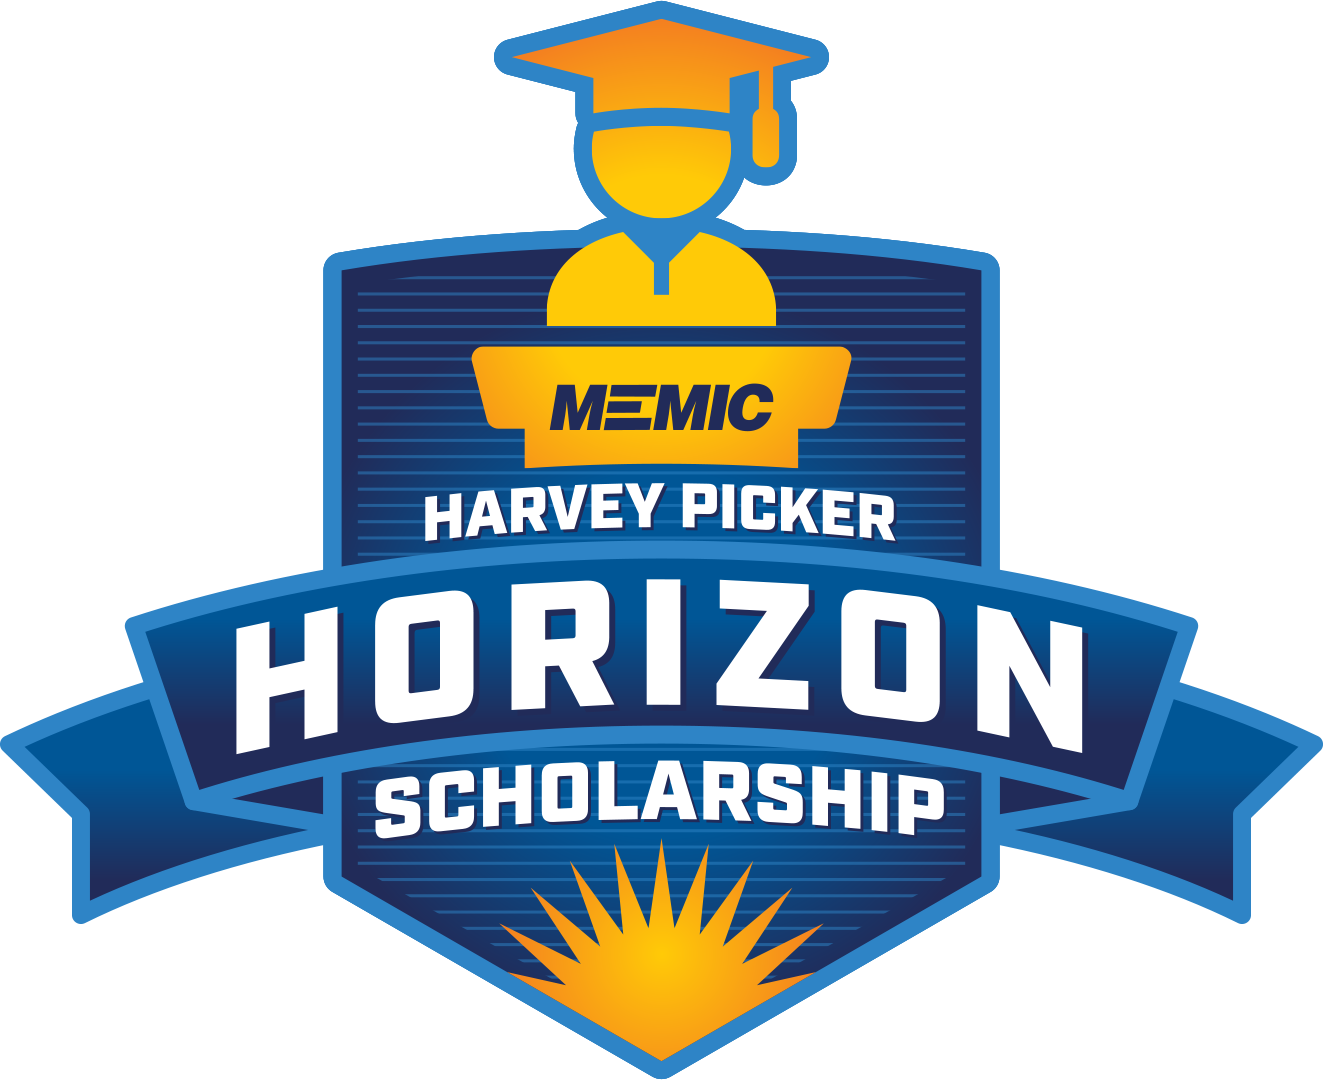 MEMIC's Harvey Picker Horizon Scholarship logo